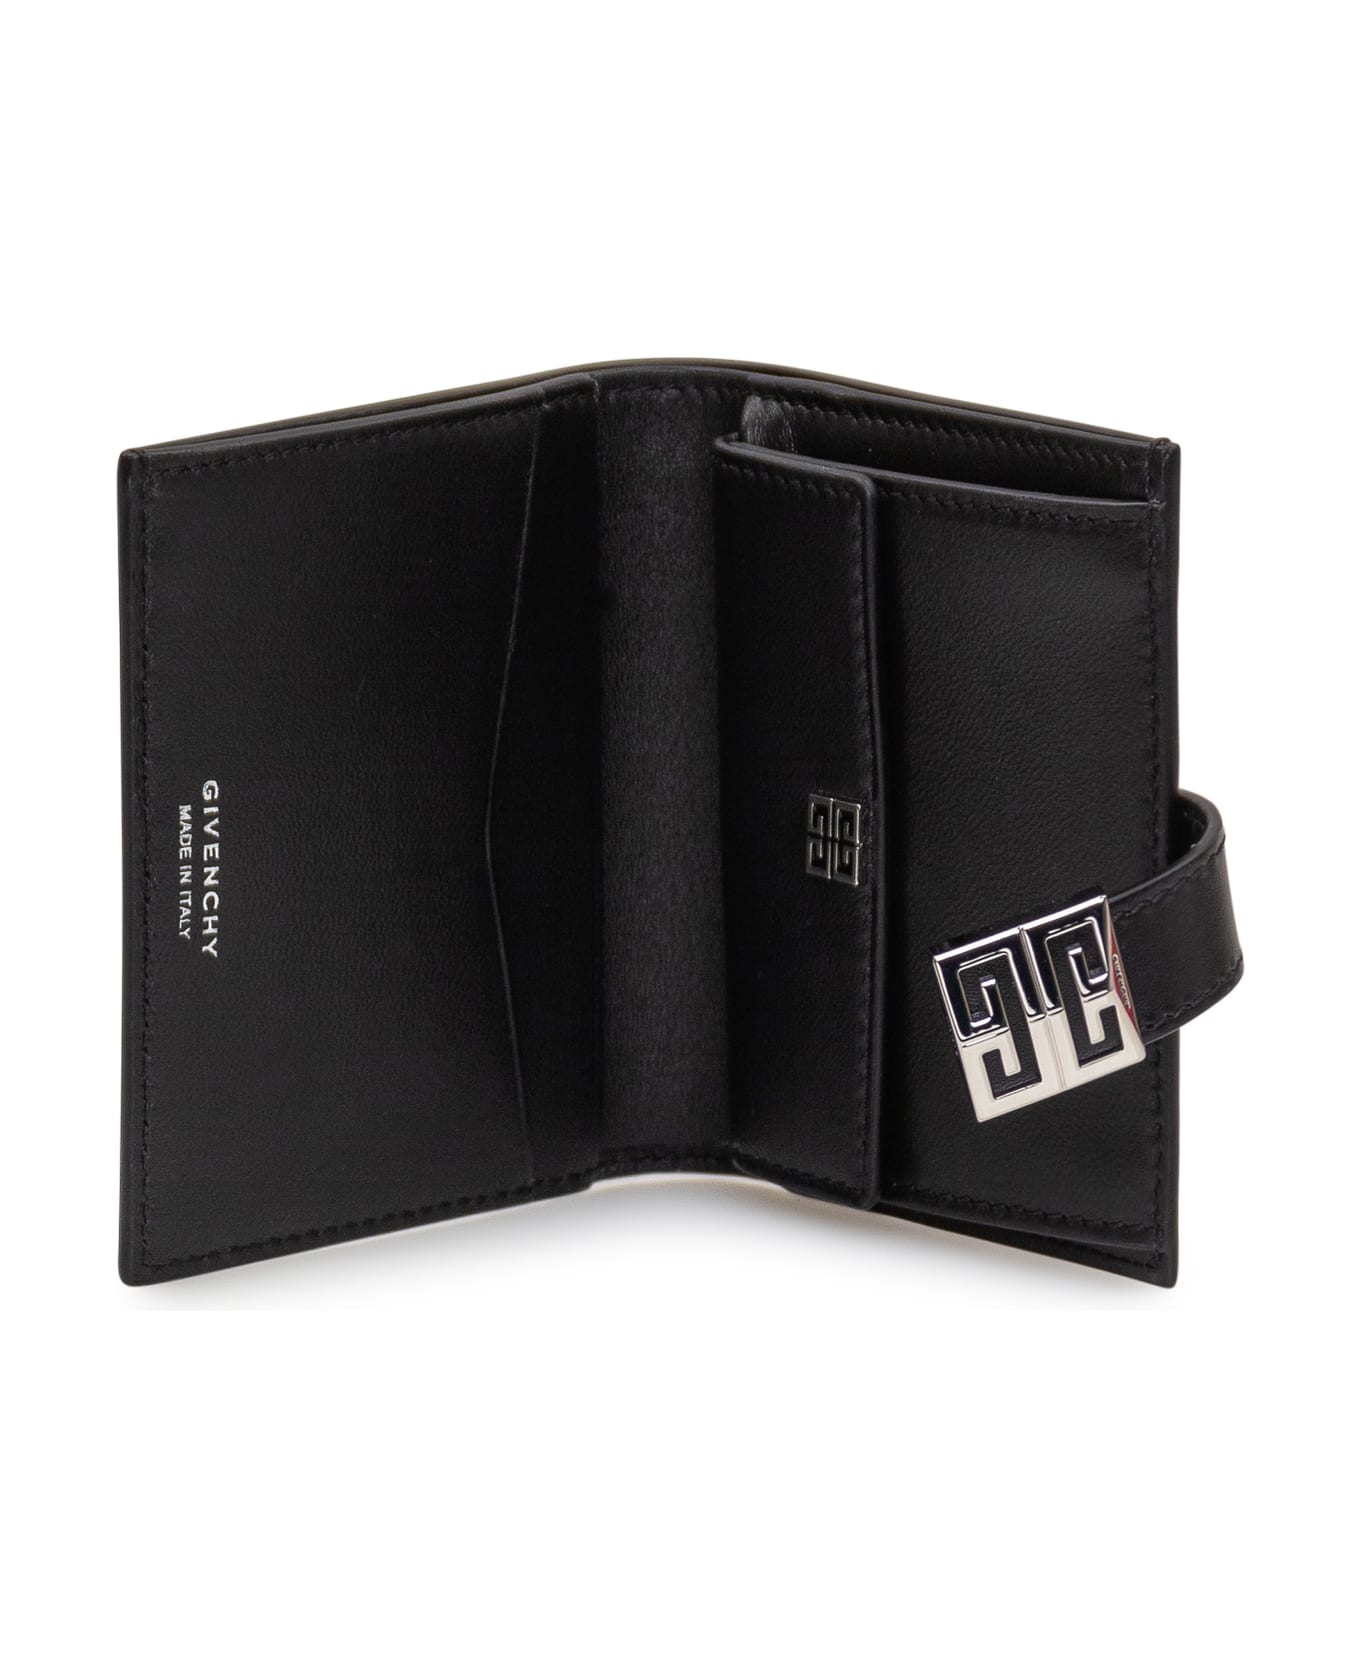 Givenchy 4g Card Holder | italist